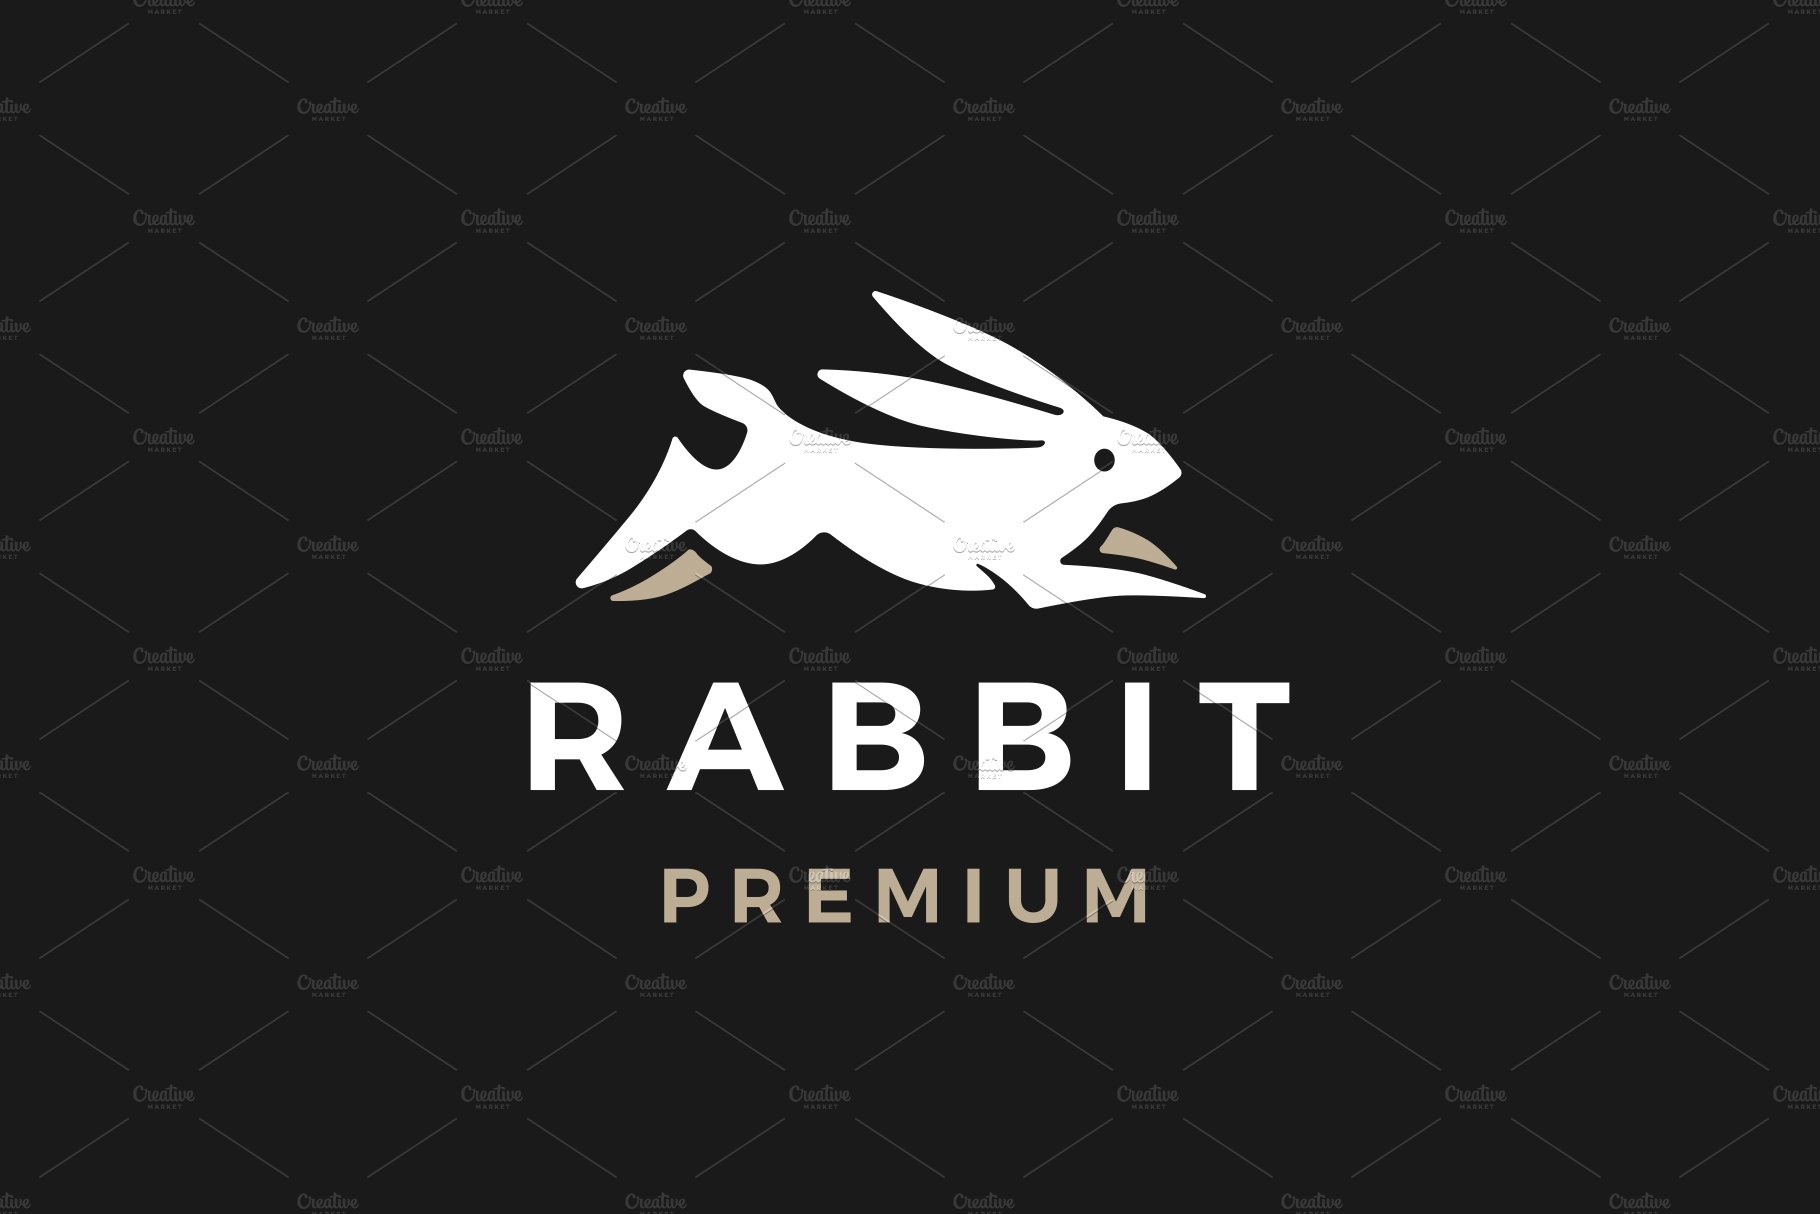 Jumping White Rabbit Logo cover image.